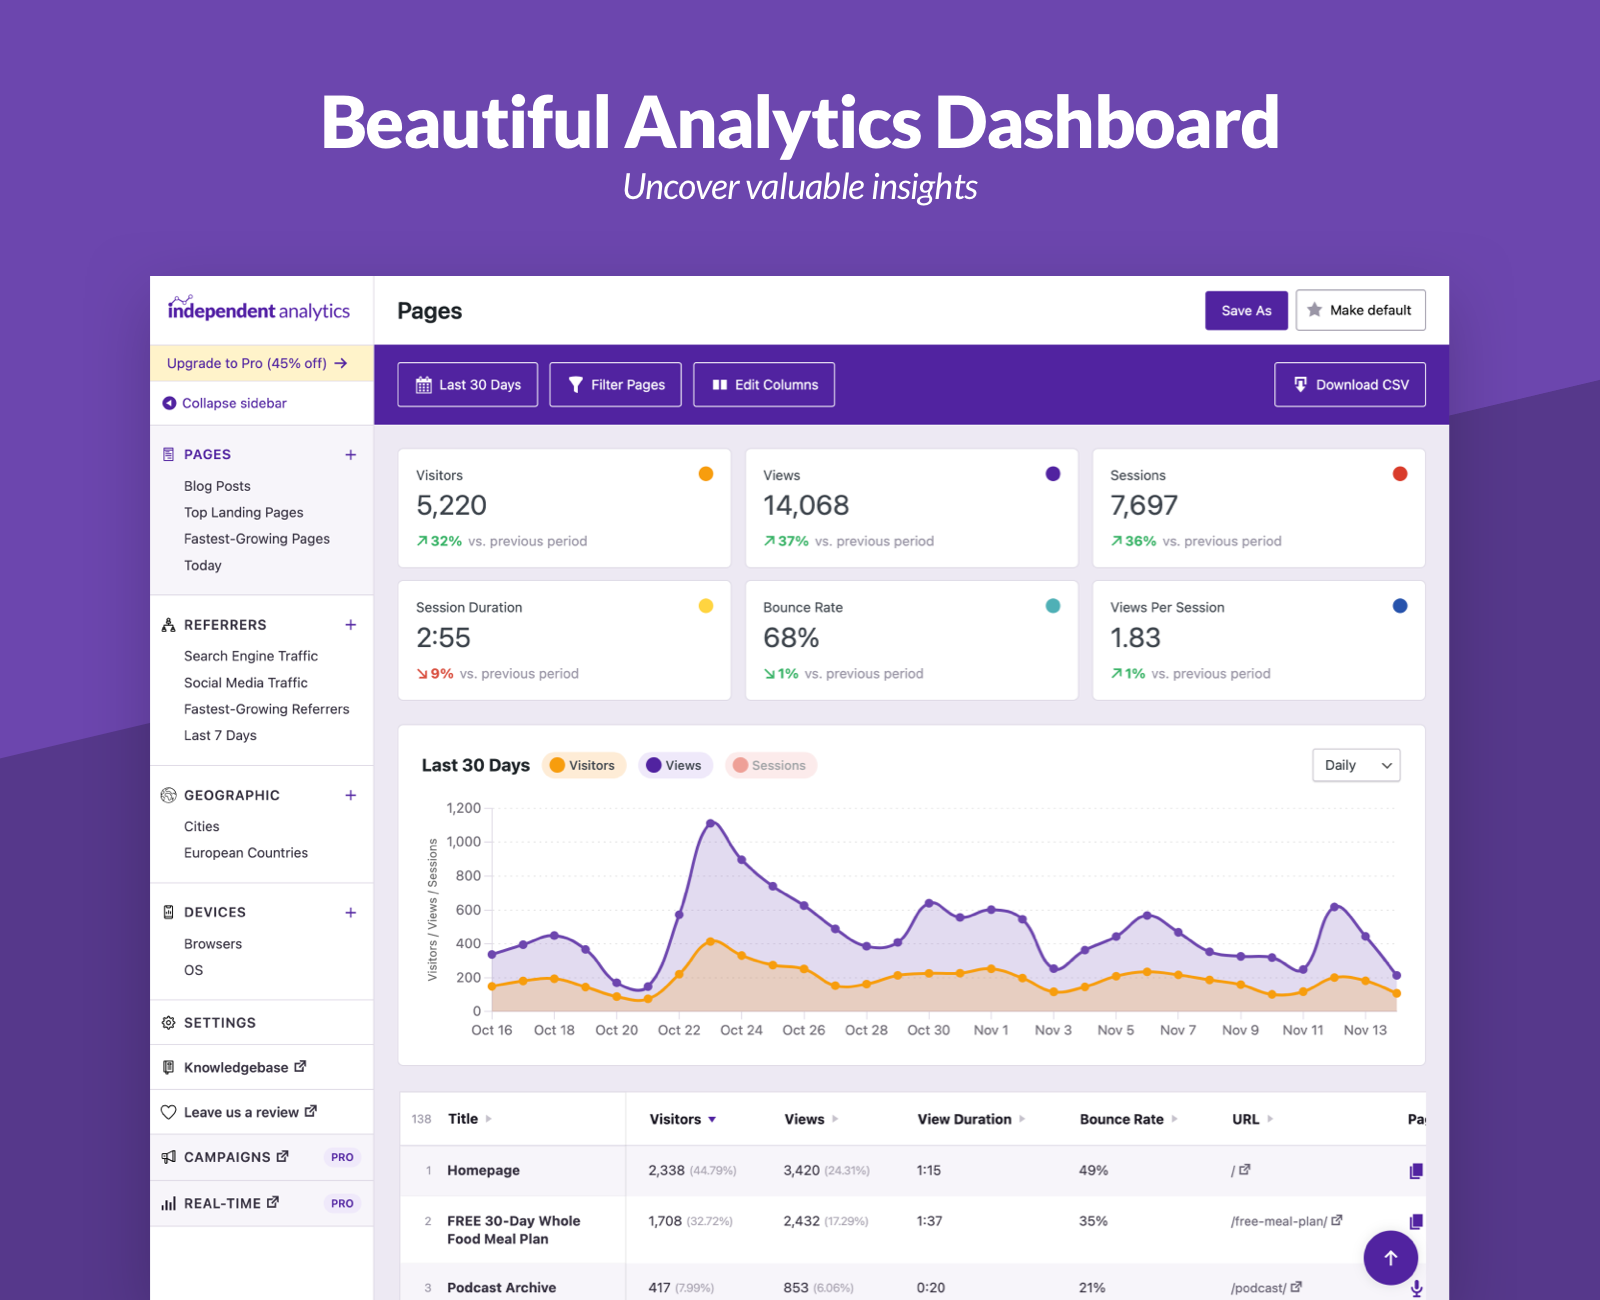 The analytics dashboard